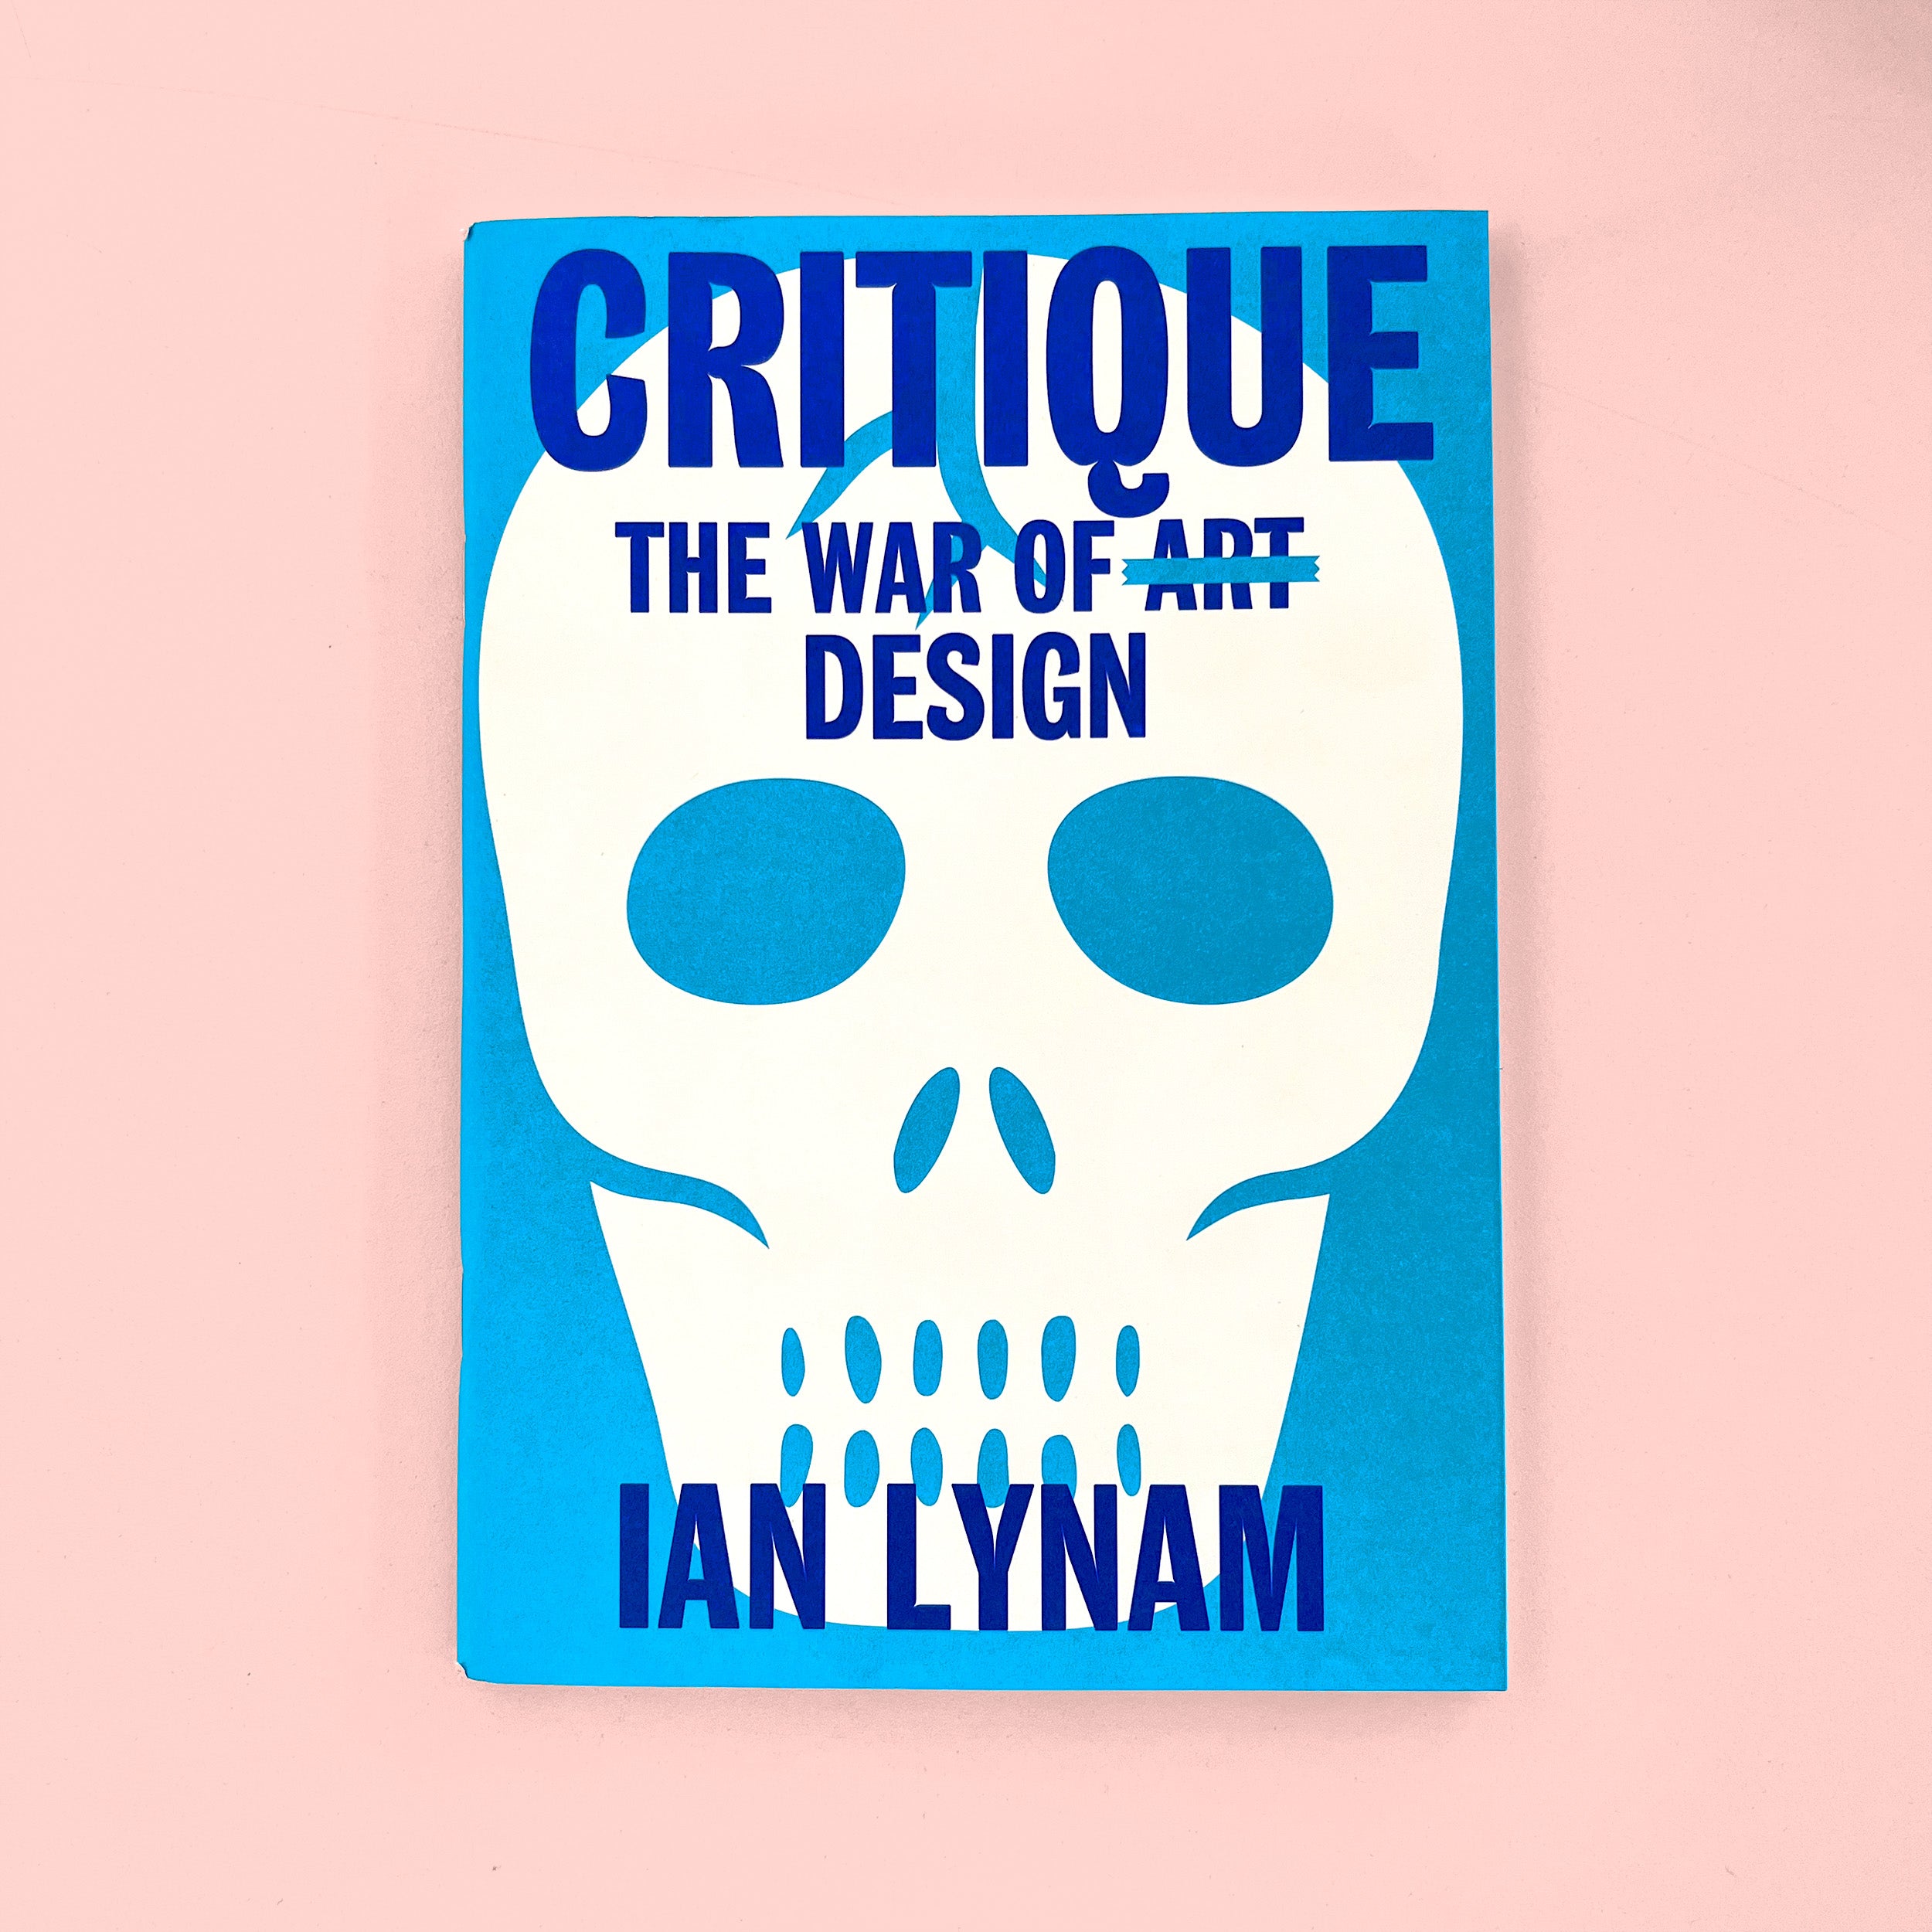 CRITIQUE: THE WAR OF DESIGN by Ian Lynam